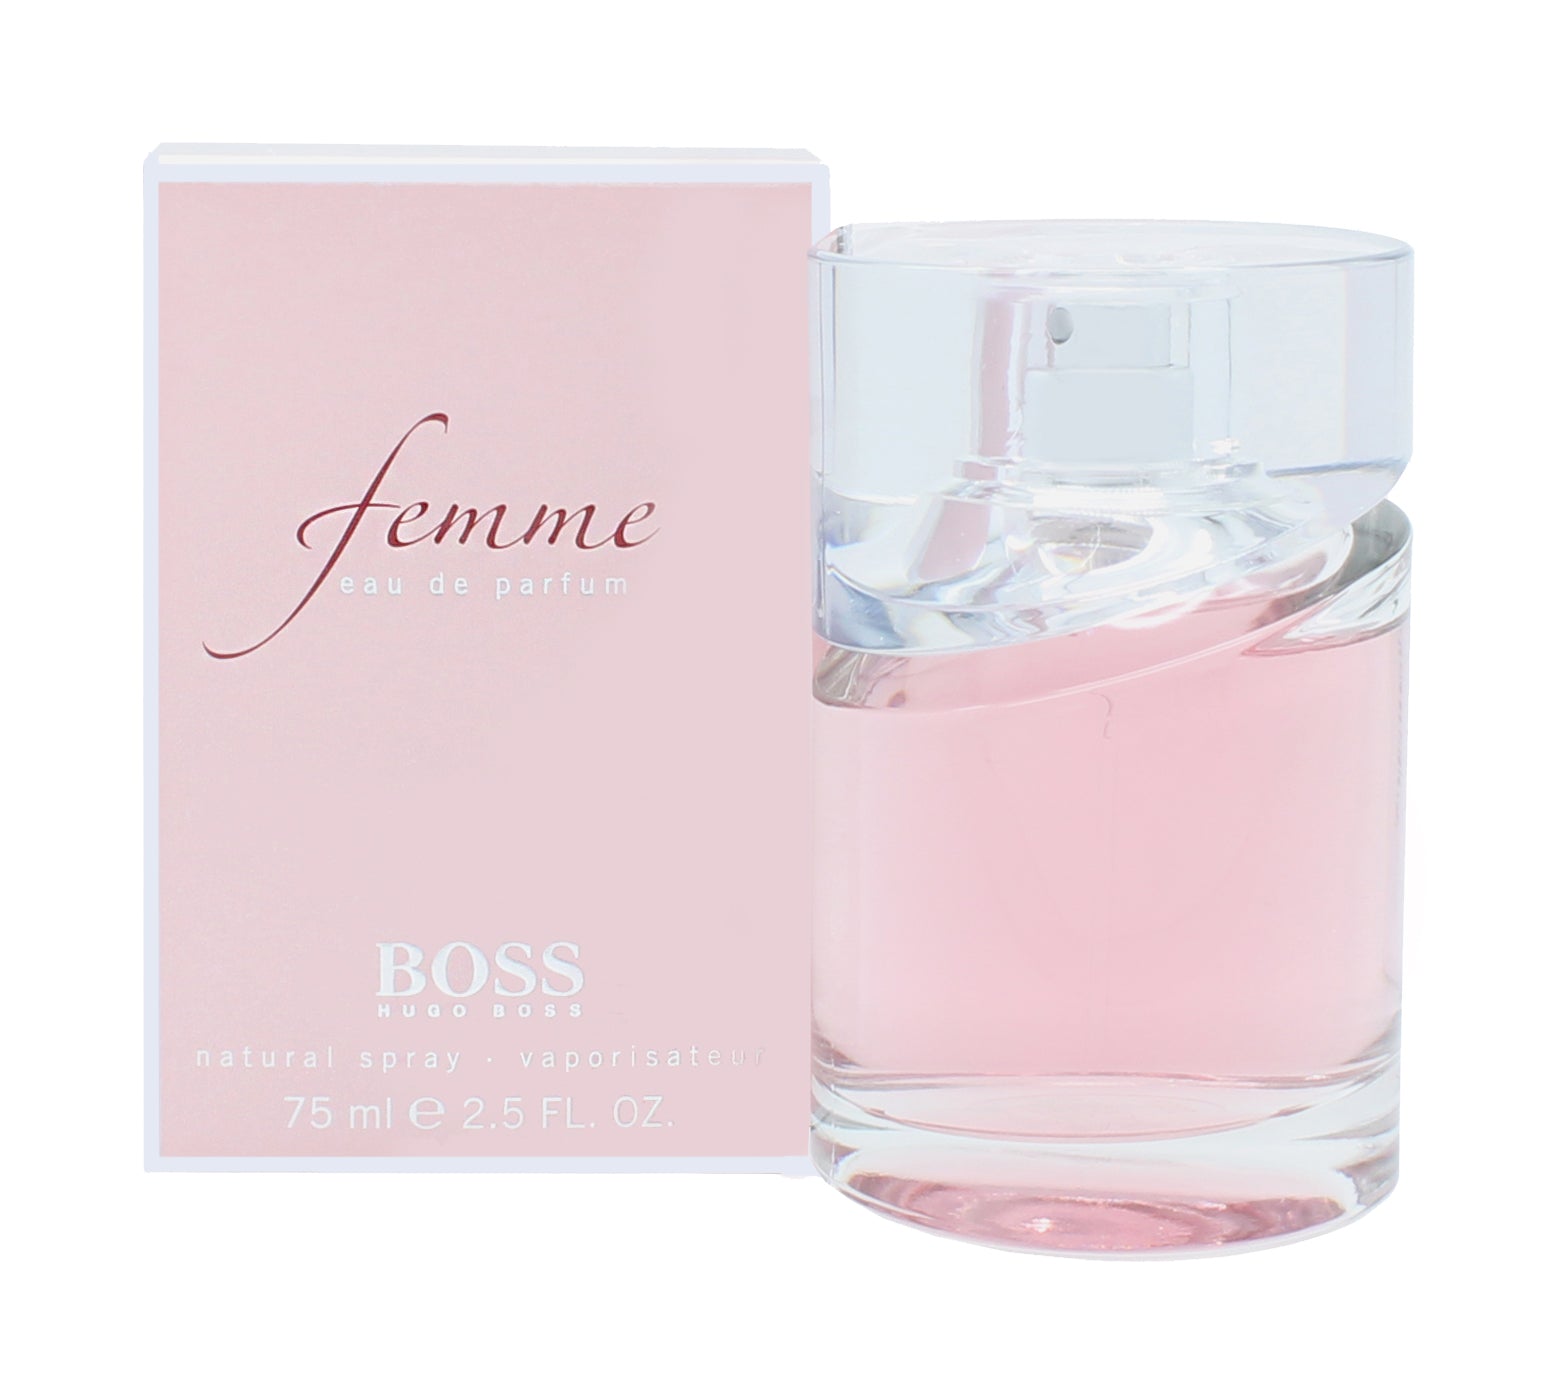 View Hugo Boss Femme Eau de Parfum 75ml Spray information